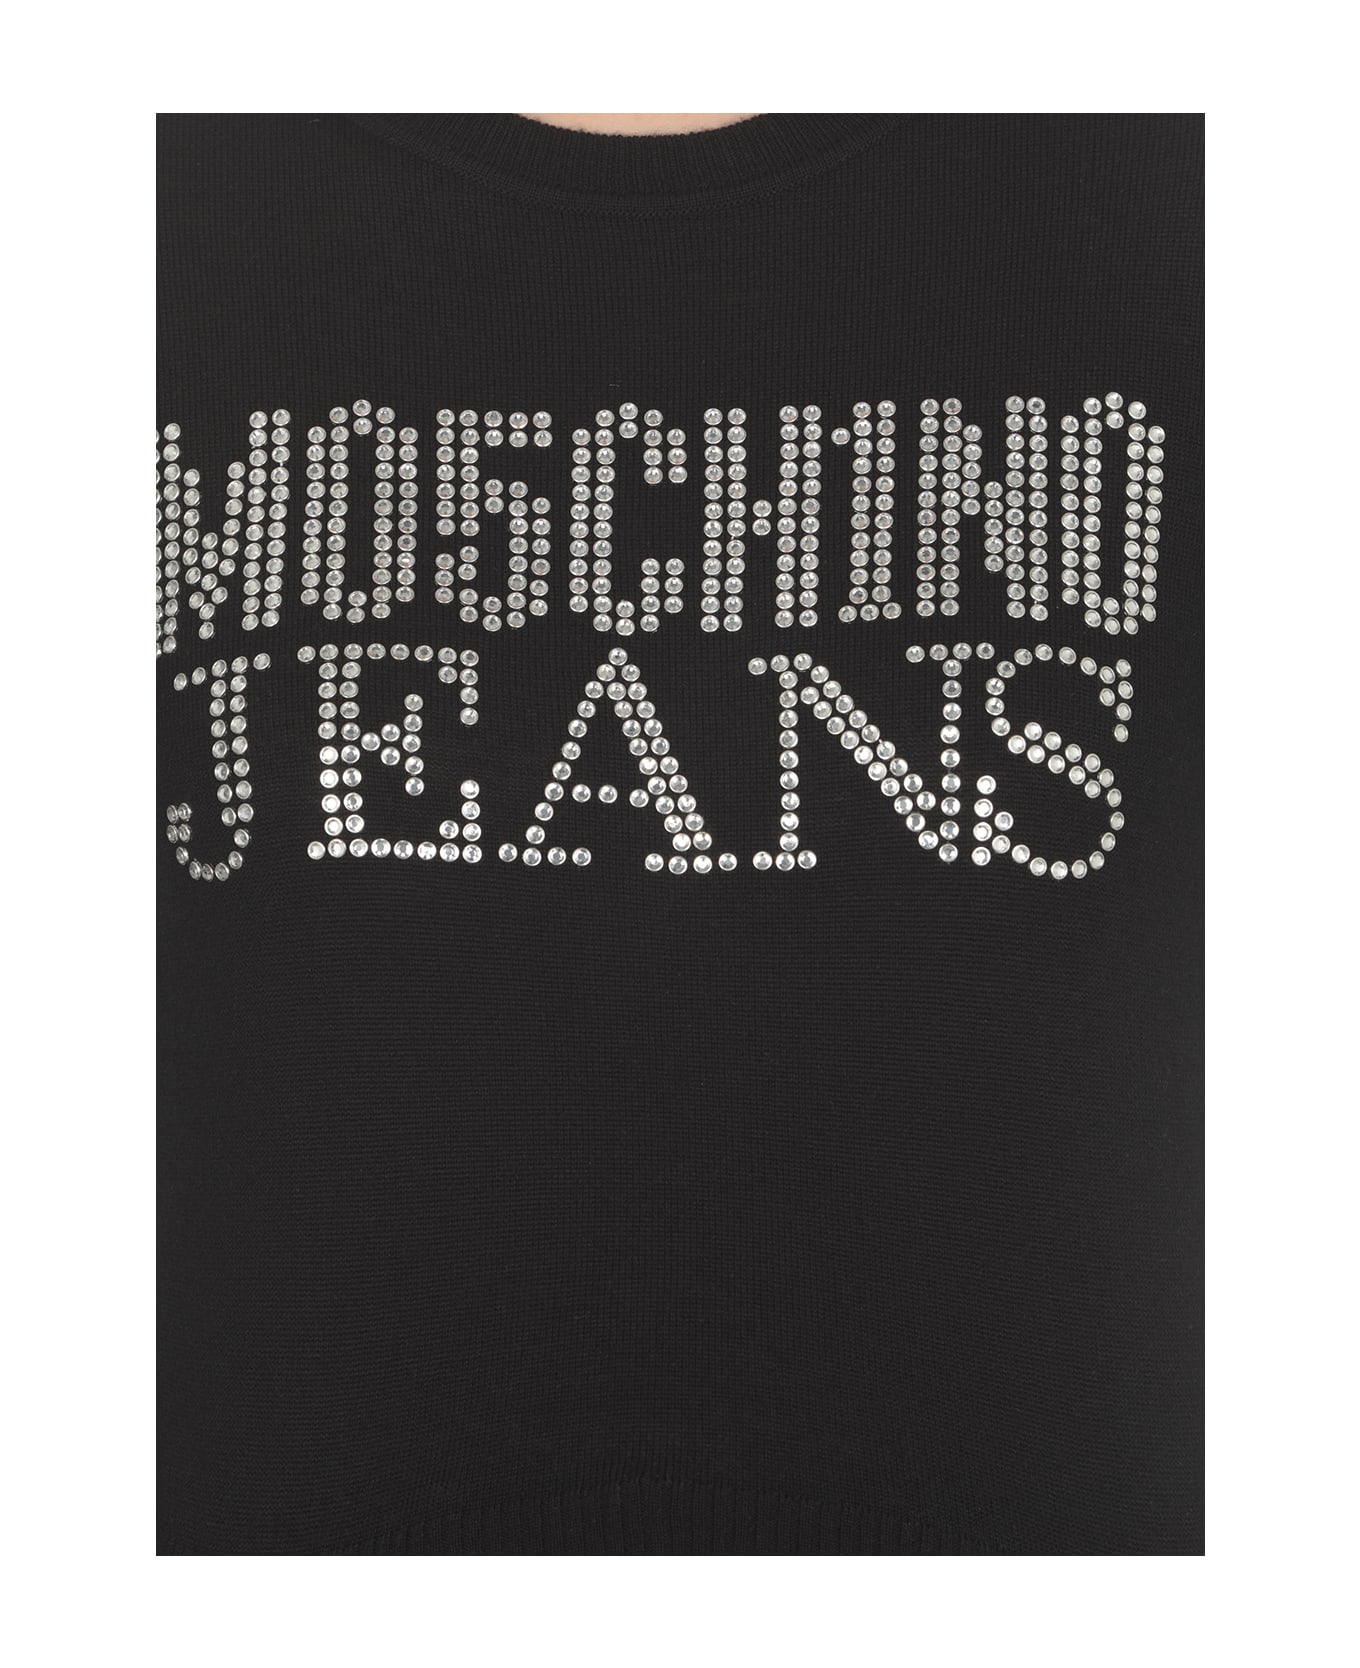 M05CH1N0 Jeans Wool Sweater - BLACK ニットウェア